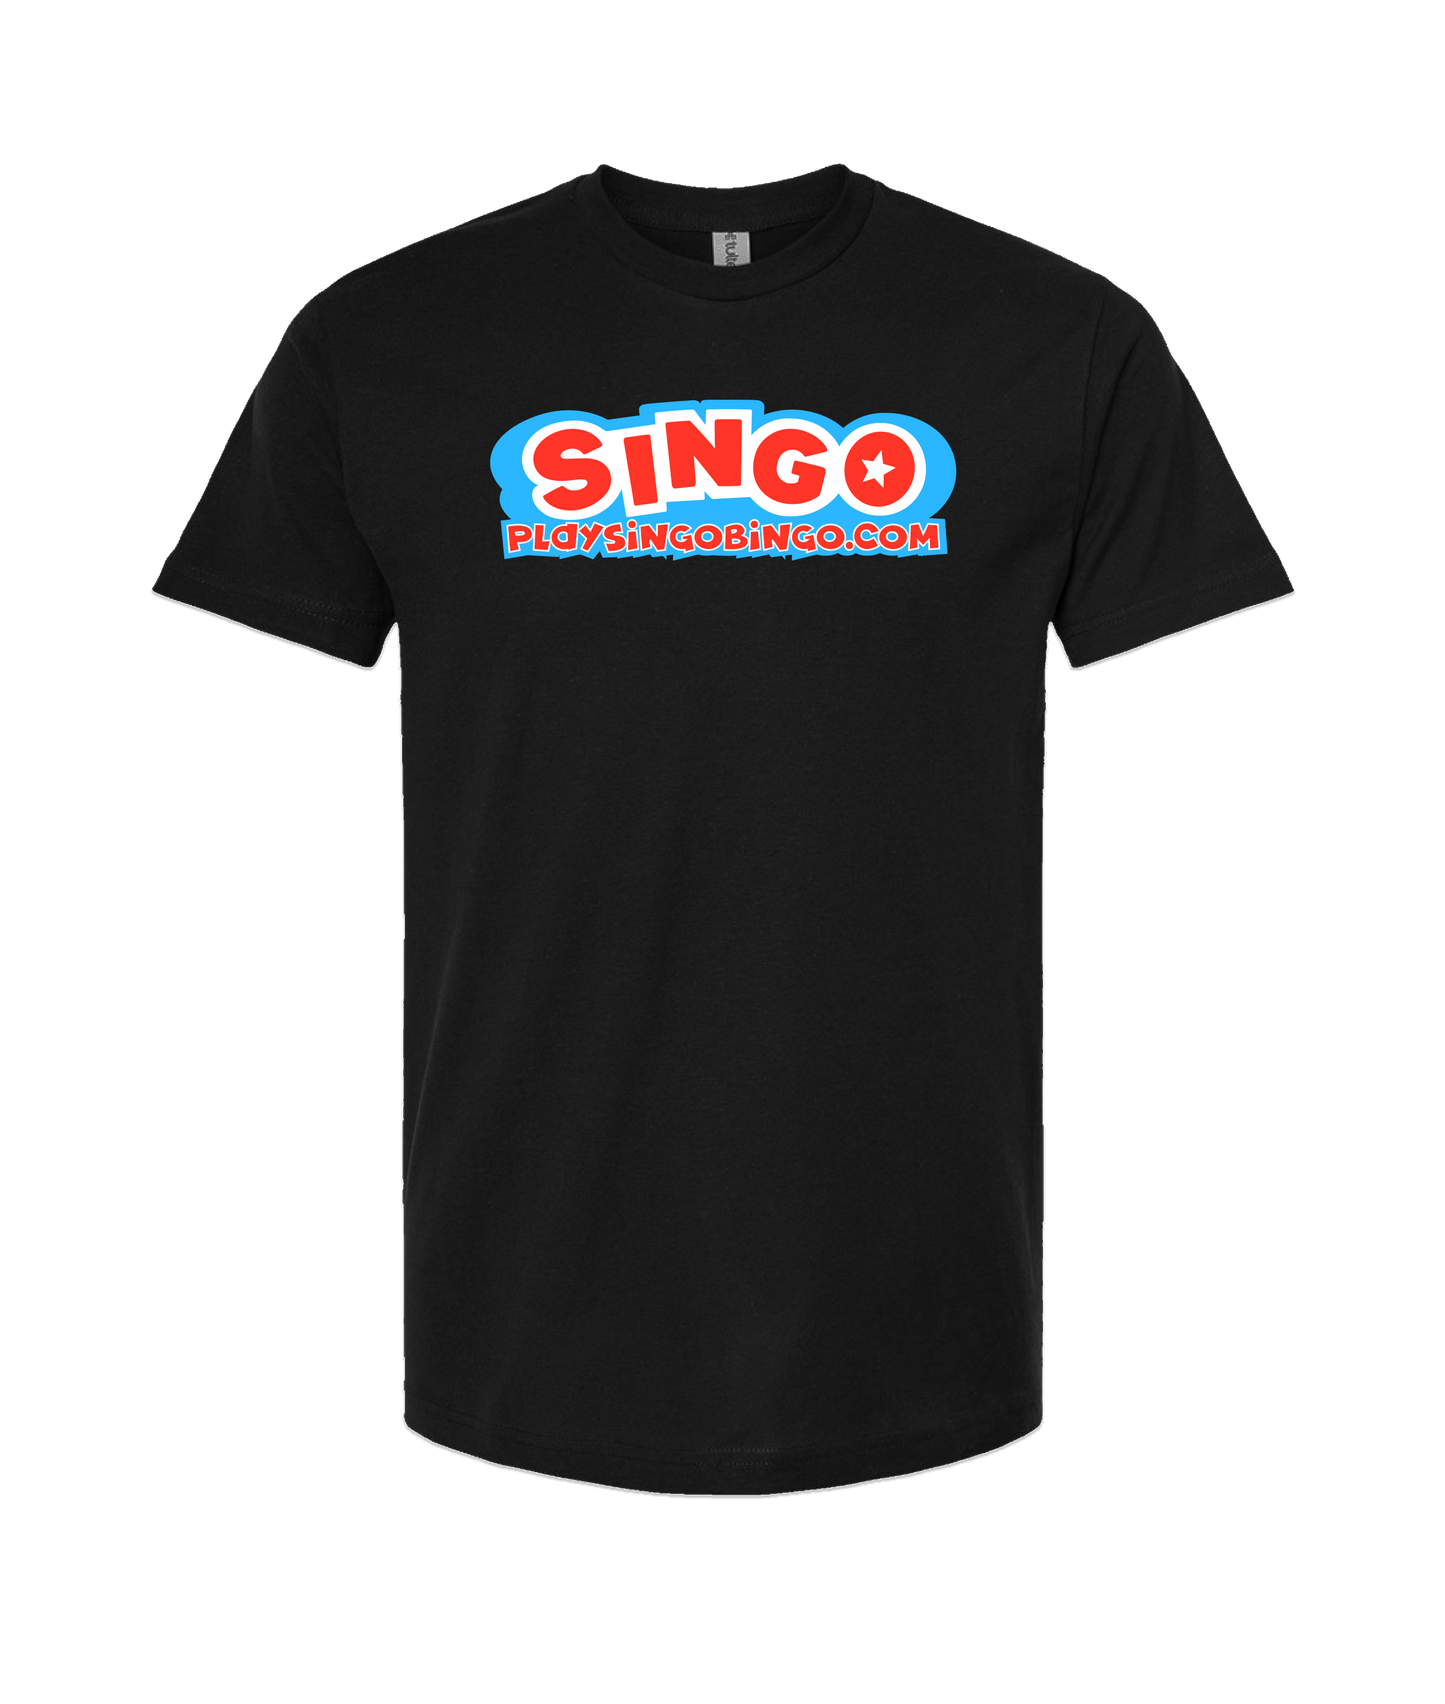 Singo Music Bingo - PlaySingoBingo.com - Black T-Shirt